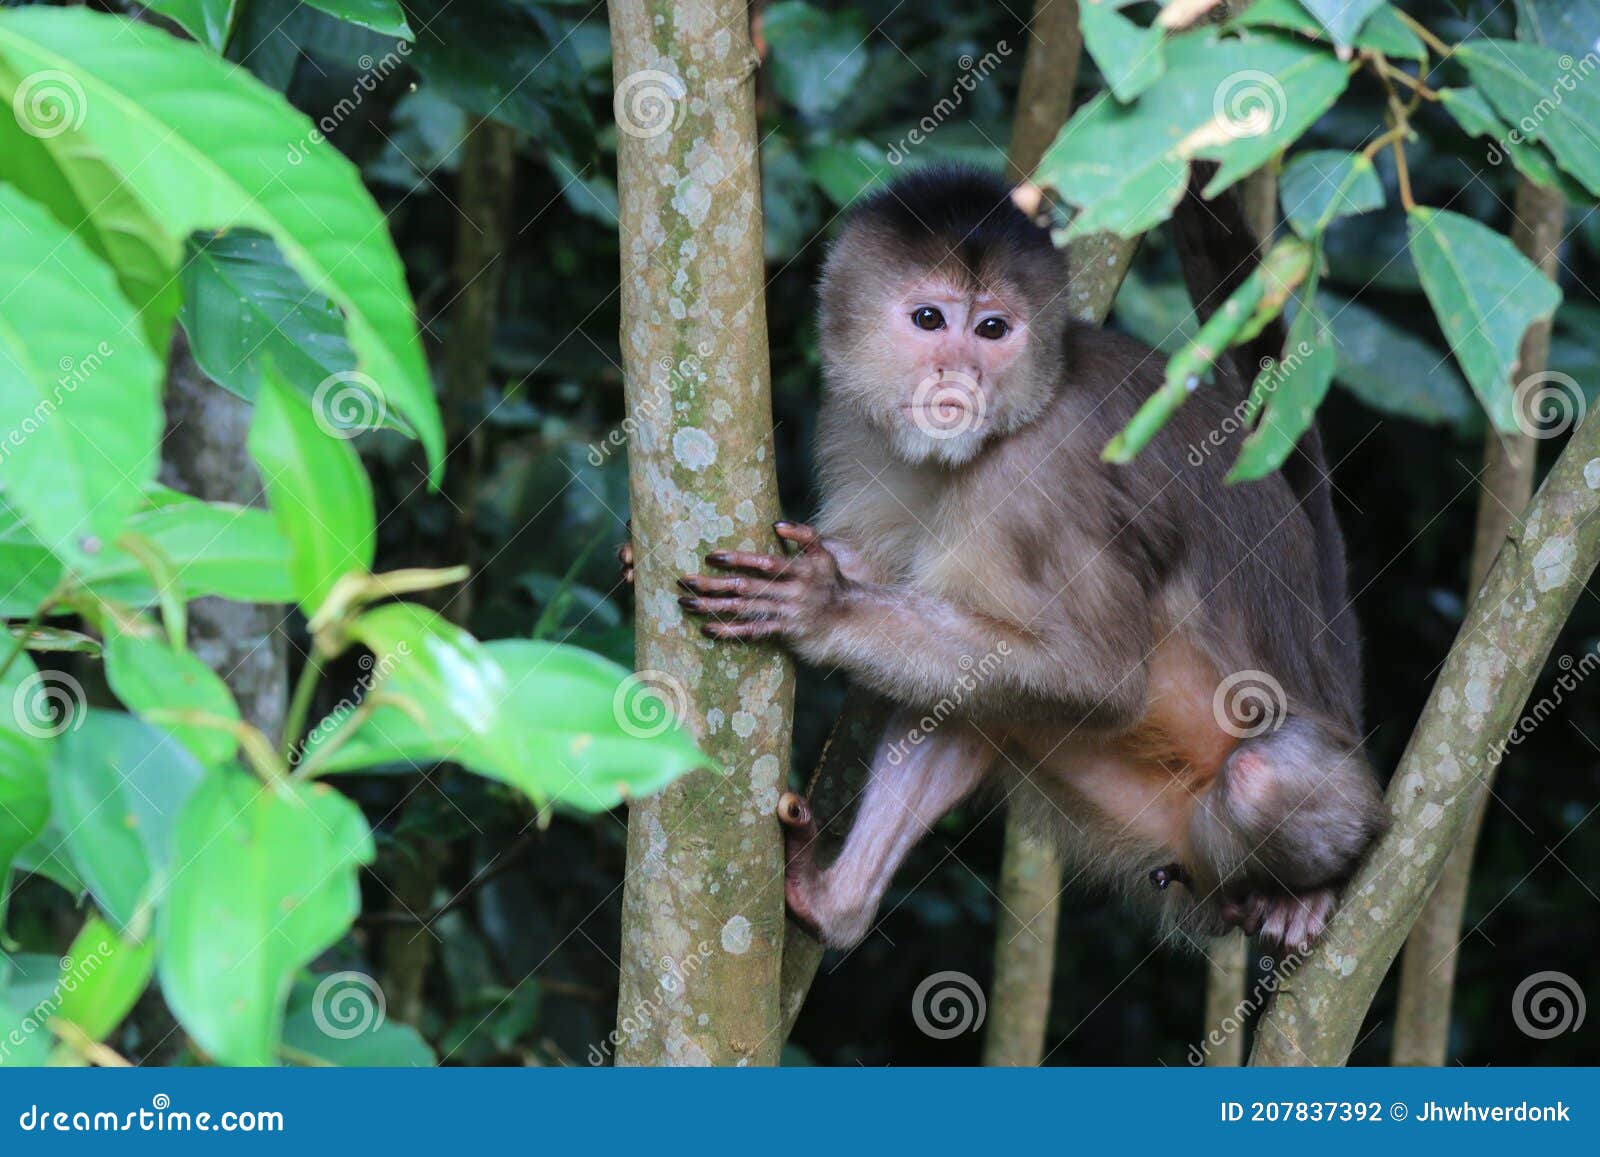 Mamíferos: Macaco-prego-de-peito-branco (Cebus albifrons)